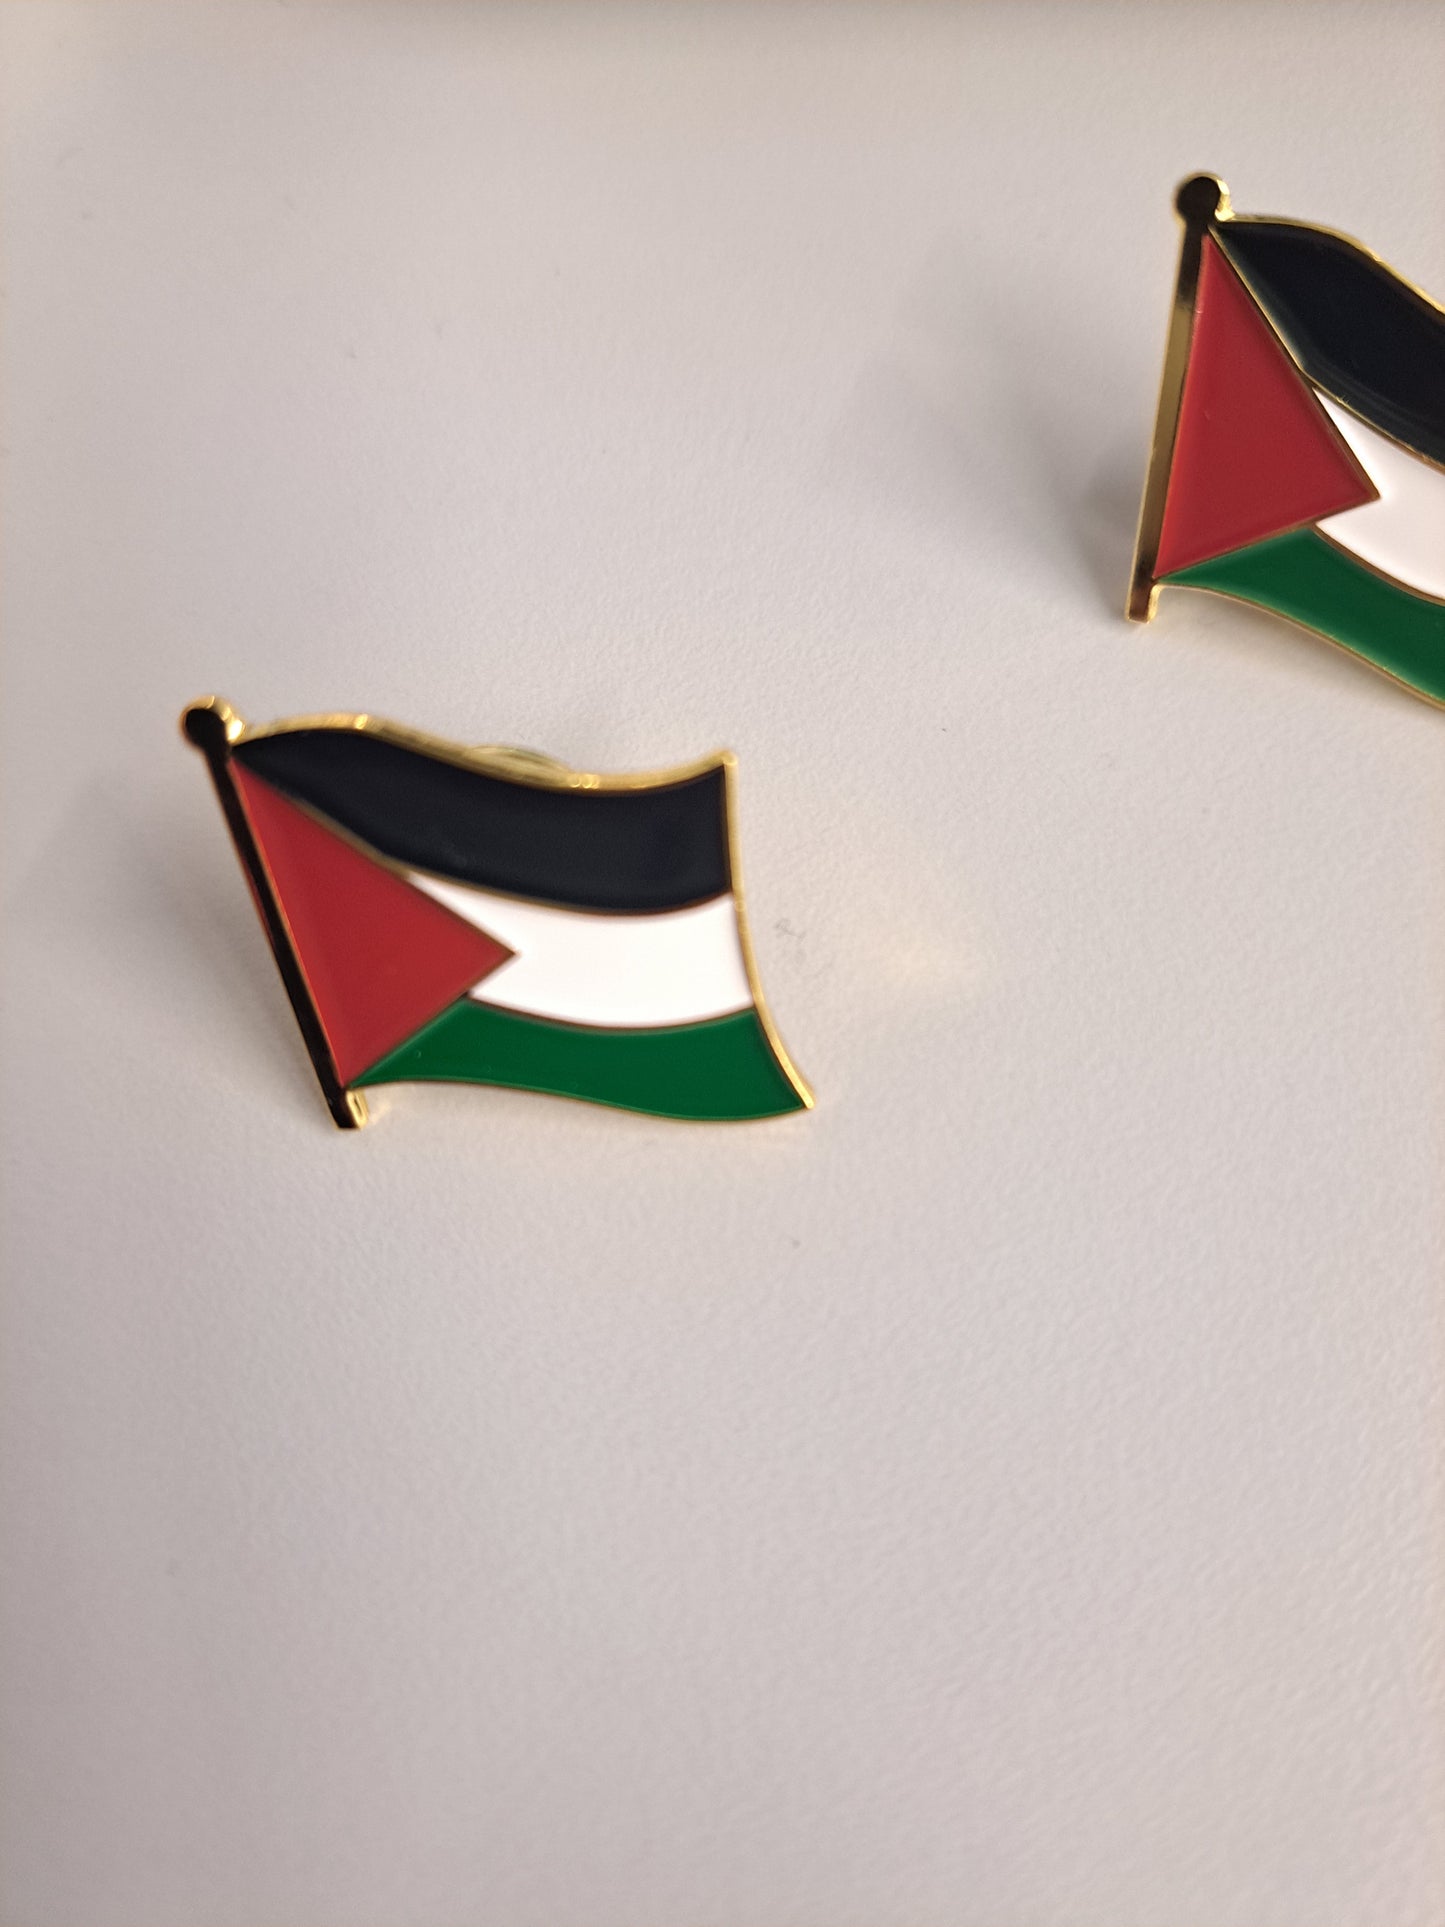 Palestine flag pins